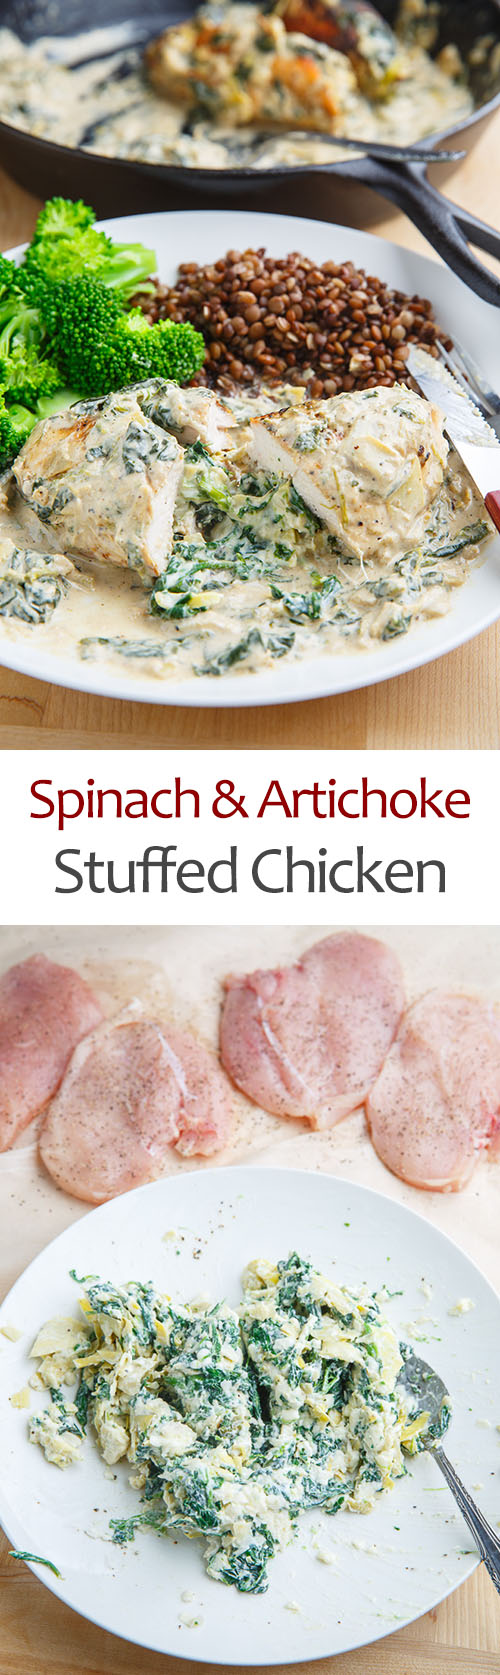 Spinach and Artichoke Stuffed Chicken